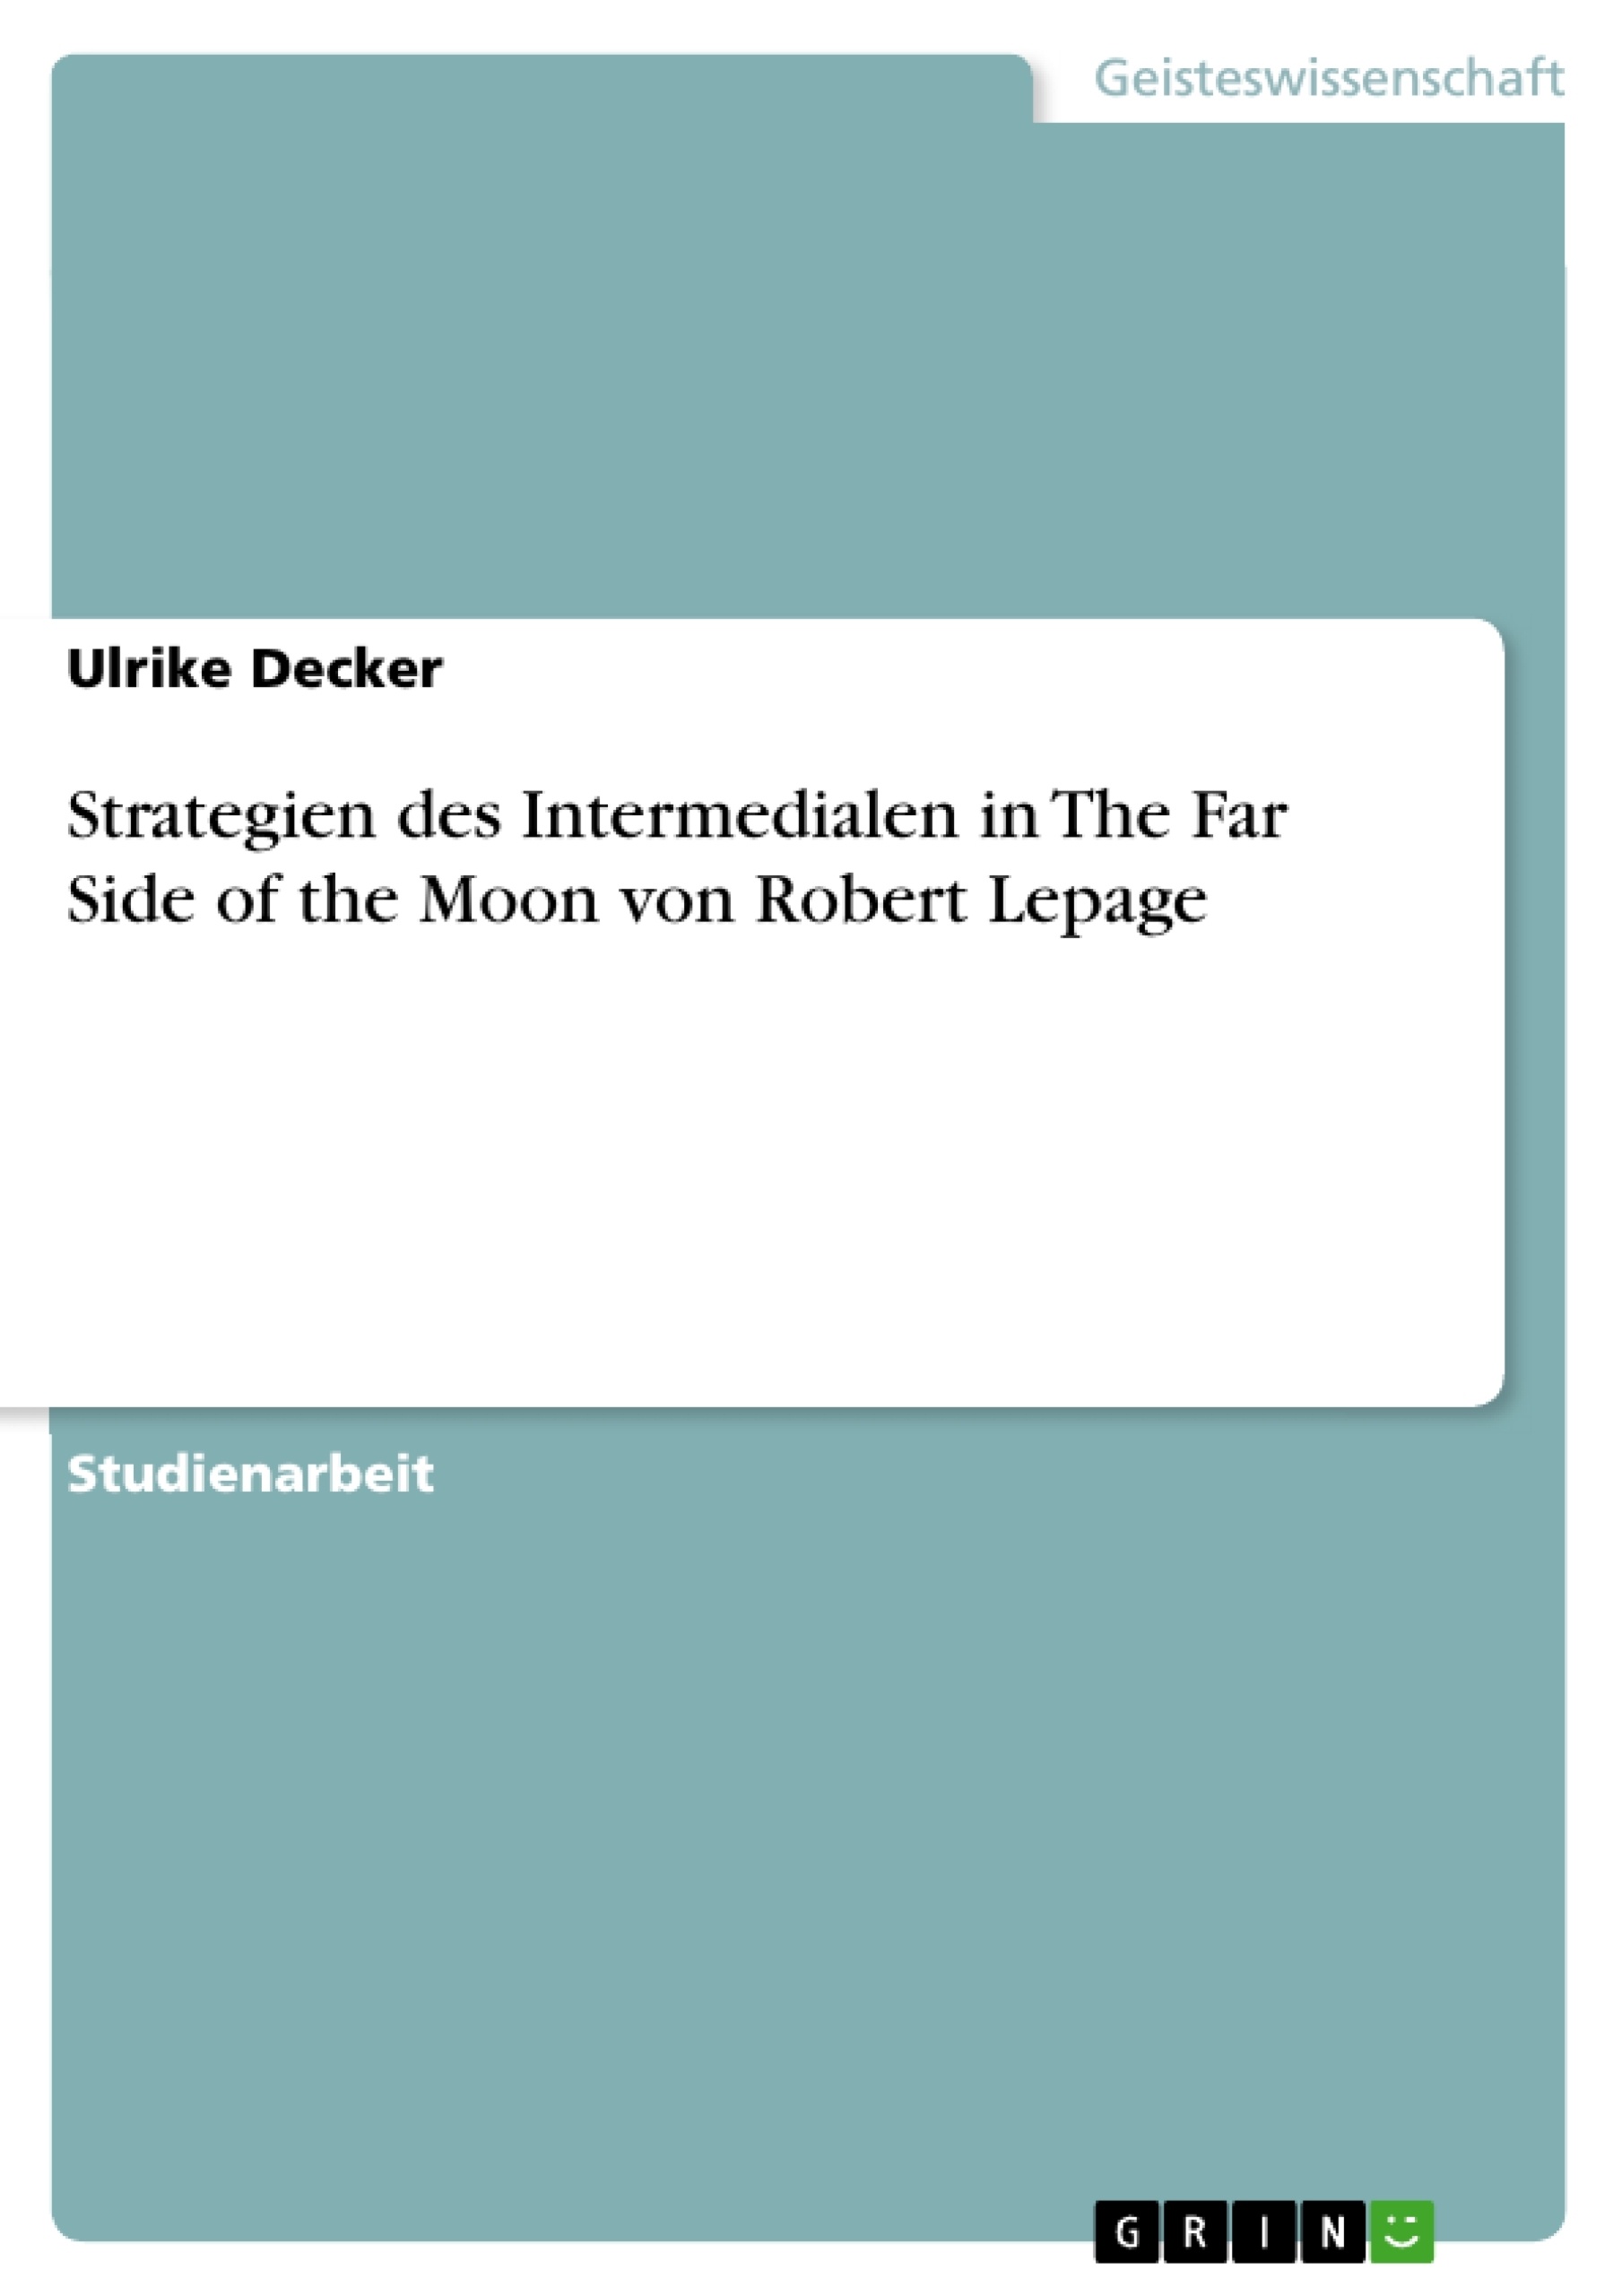 Título: Strategien des Intermedialen in The Far Side of the Moon von Robert Lepage